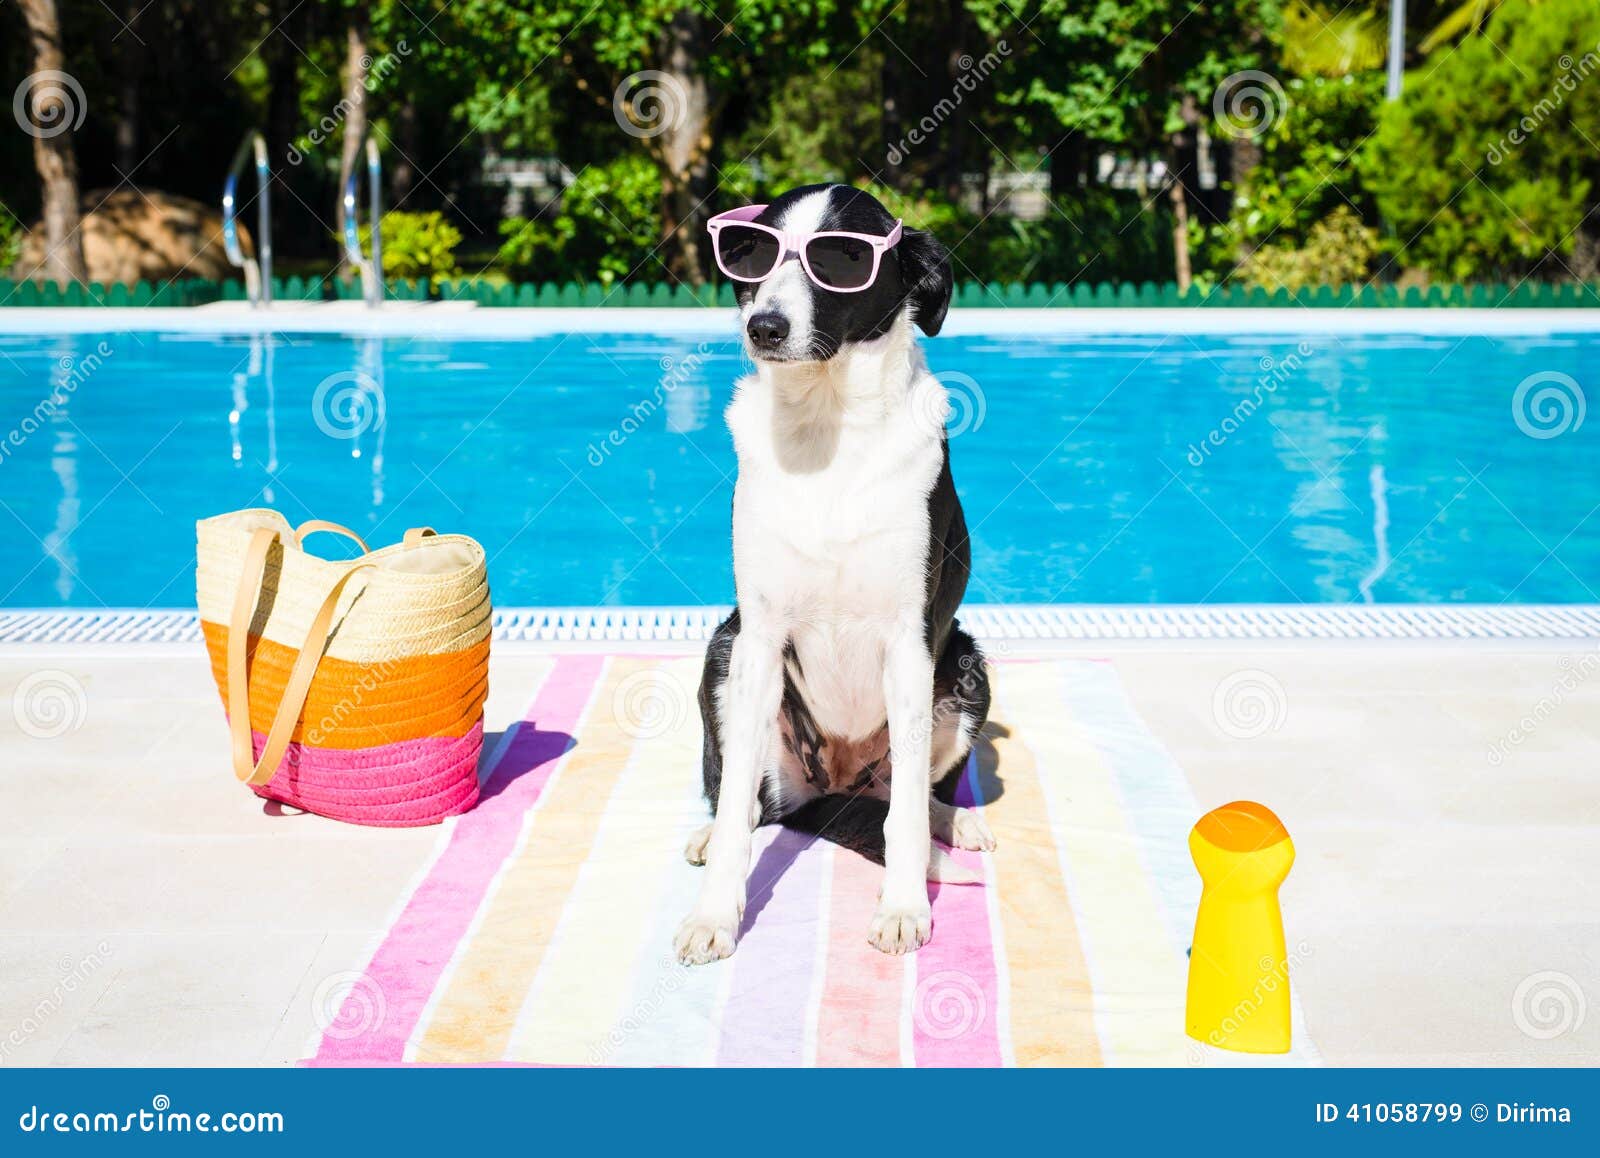 funny-dog-summer-vacation-swimming-pool-wearing-sunglasses-41058799.jpg